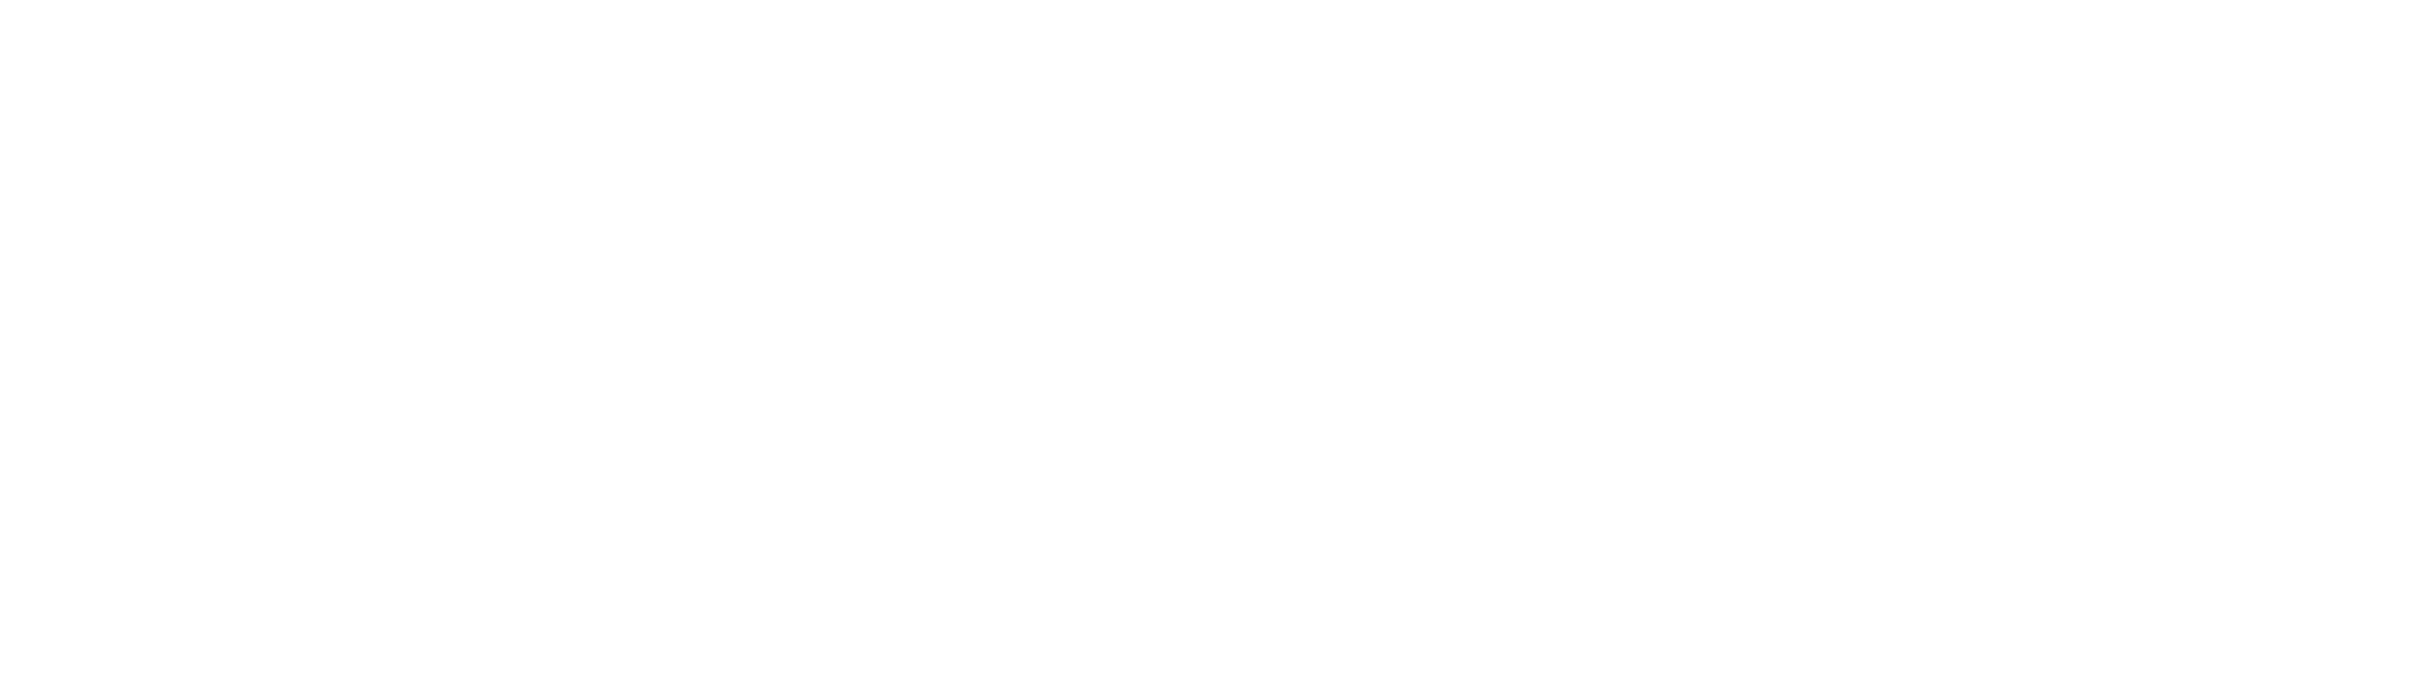 Lassonde School of Engineering at York University